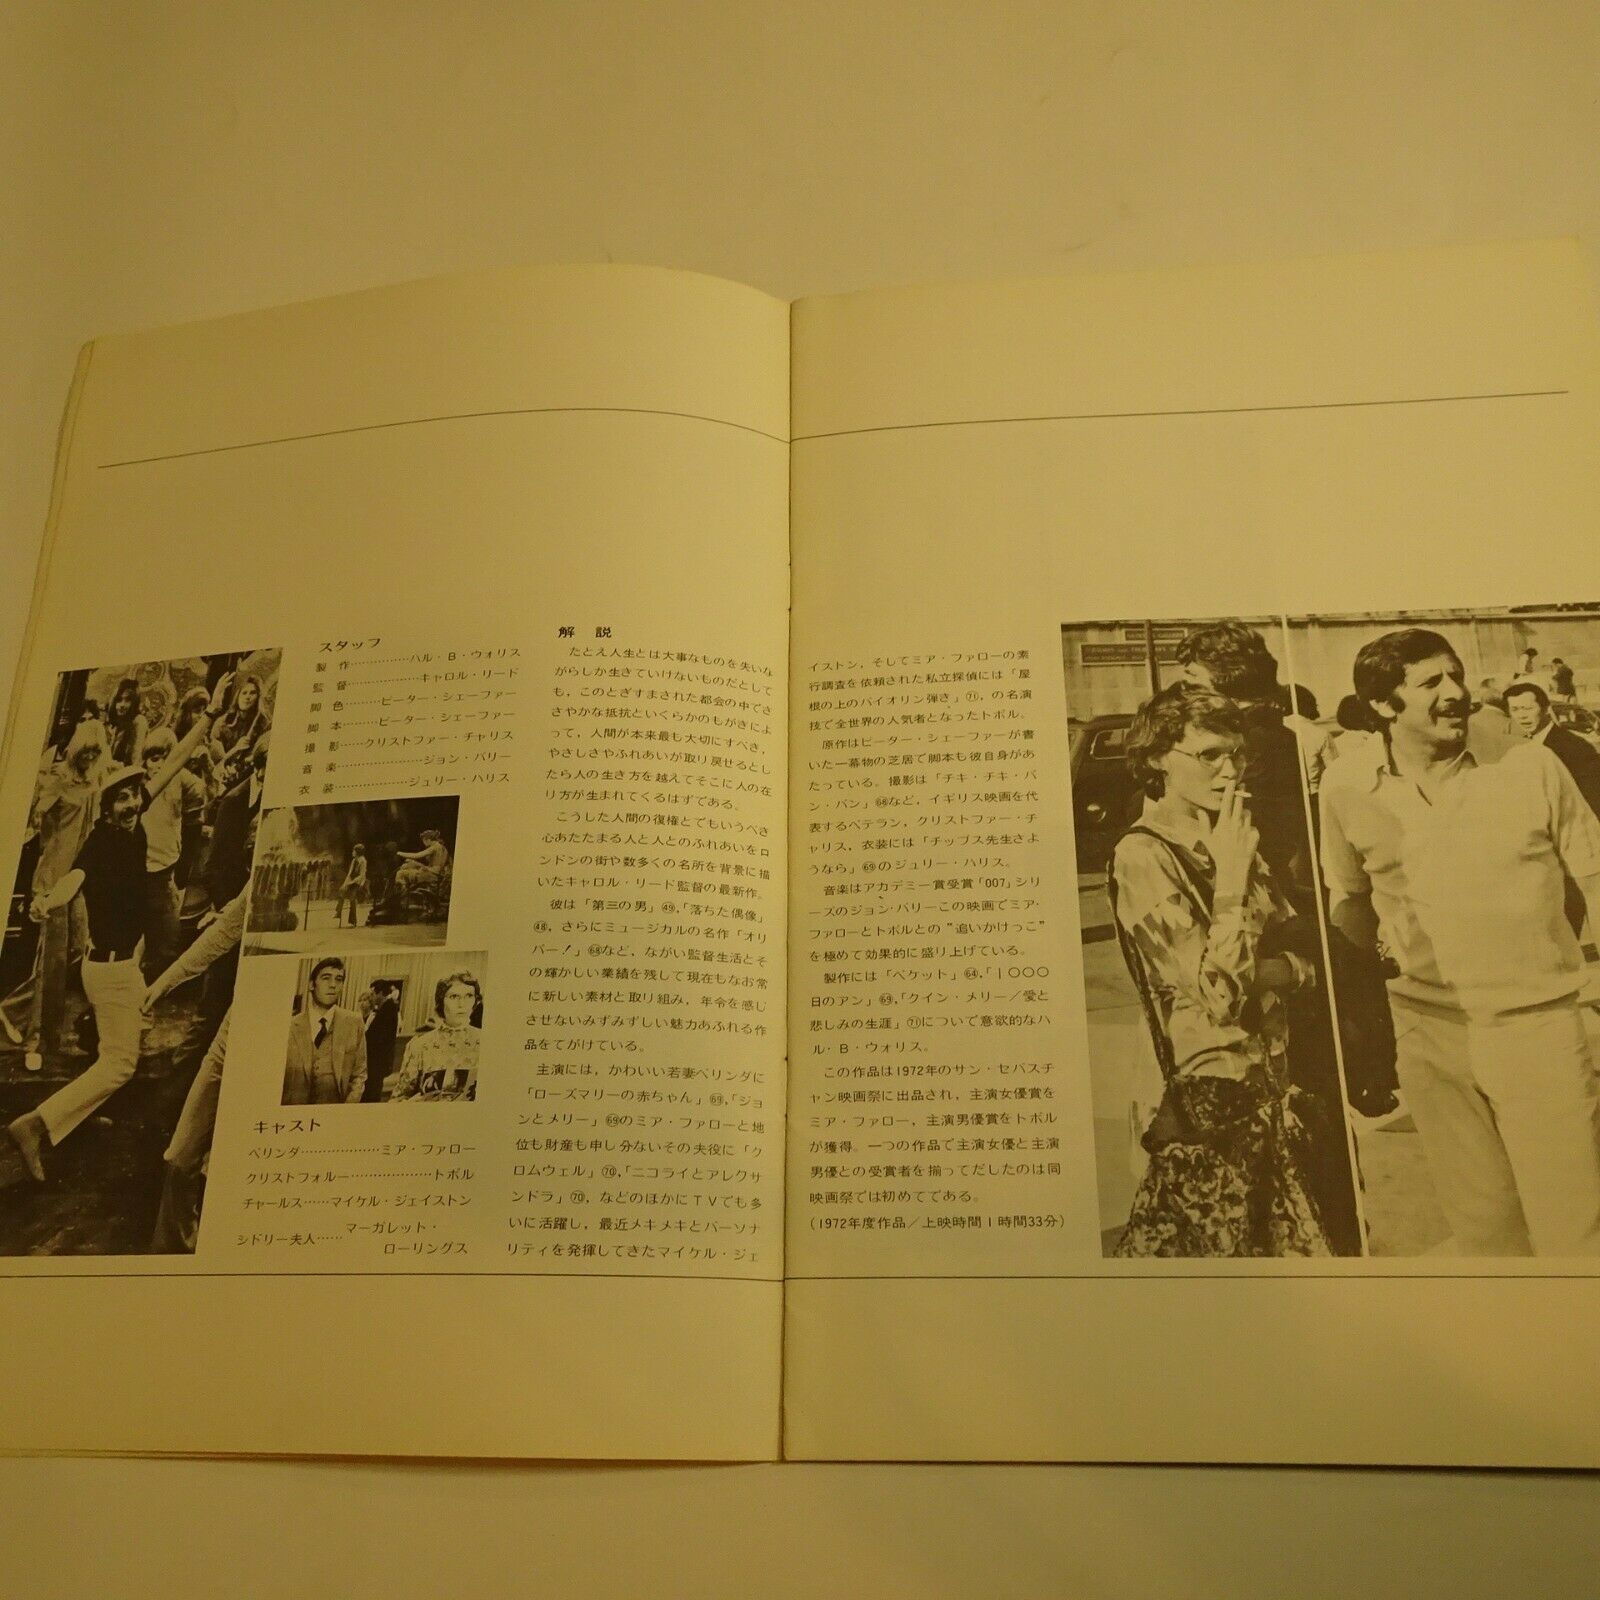 Follow Me 1972 Japonais Film Program Mia And Similar Items